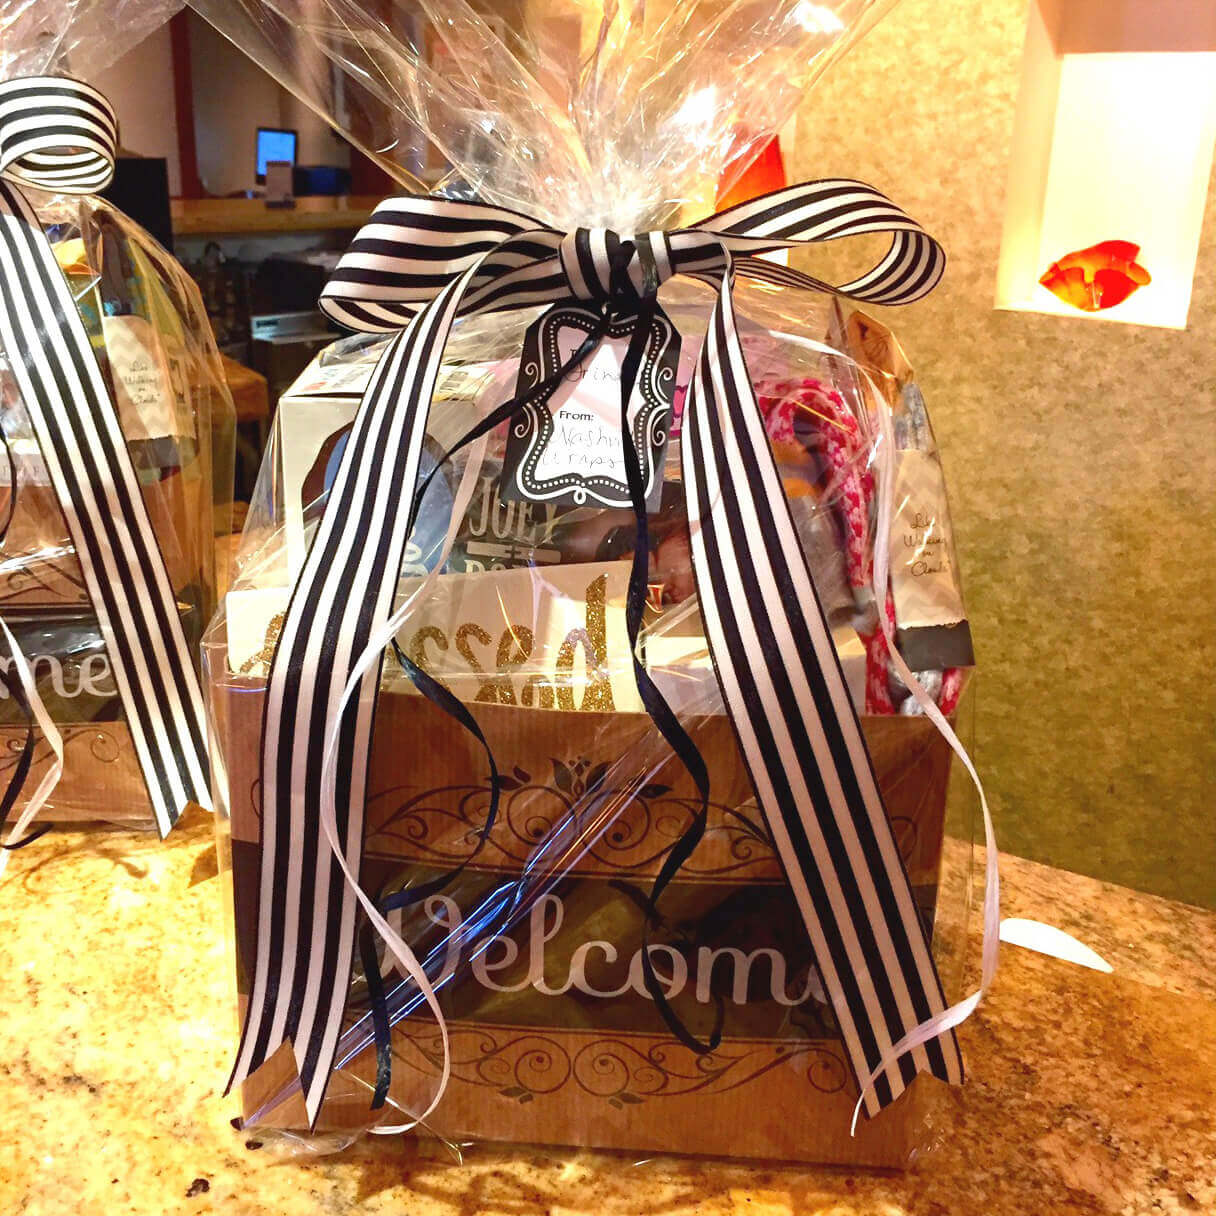 New Basket Boxes for Realtor Thank You Gifts & More! - Nashville Wraps Blog